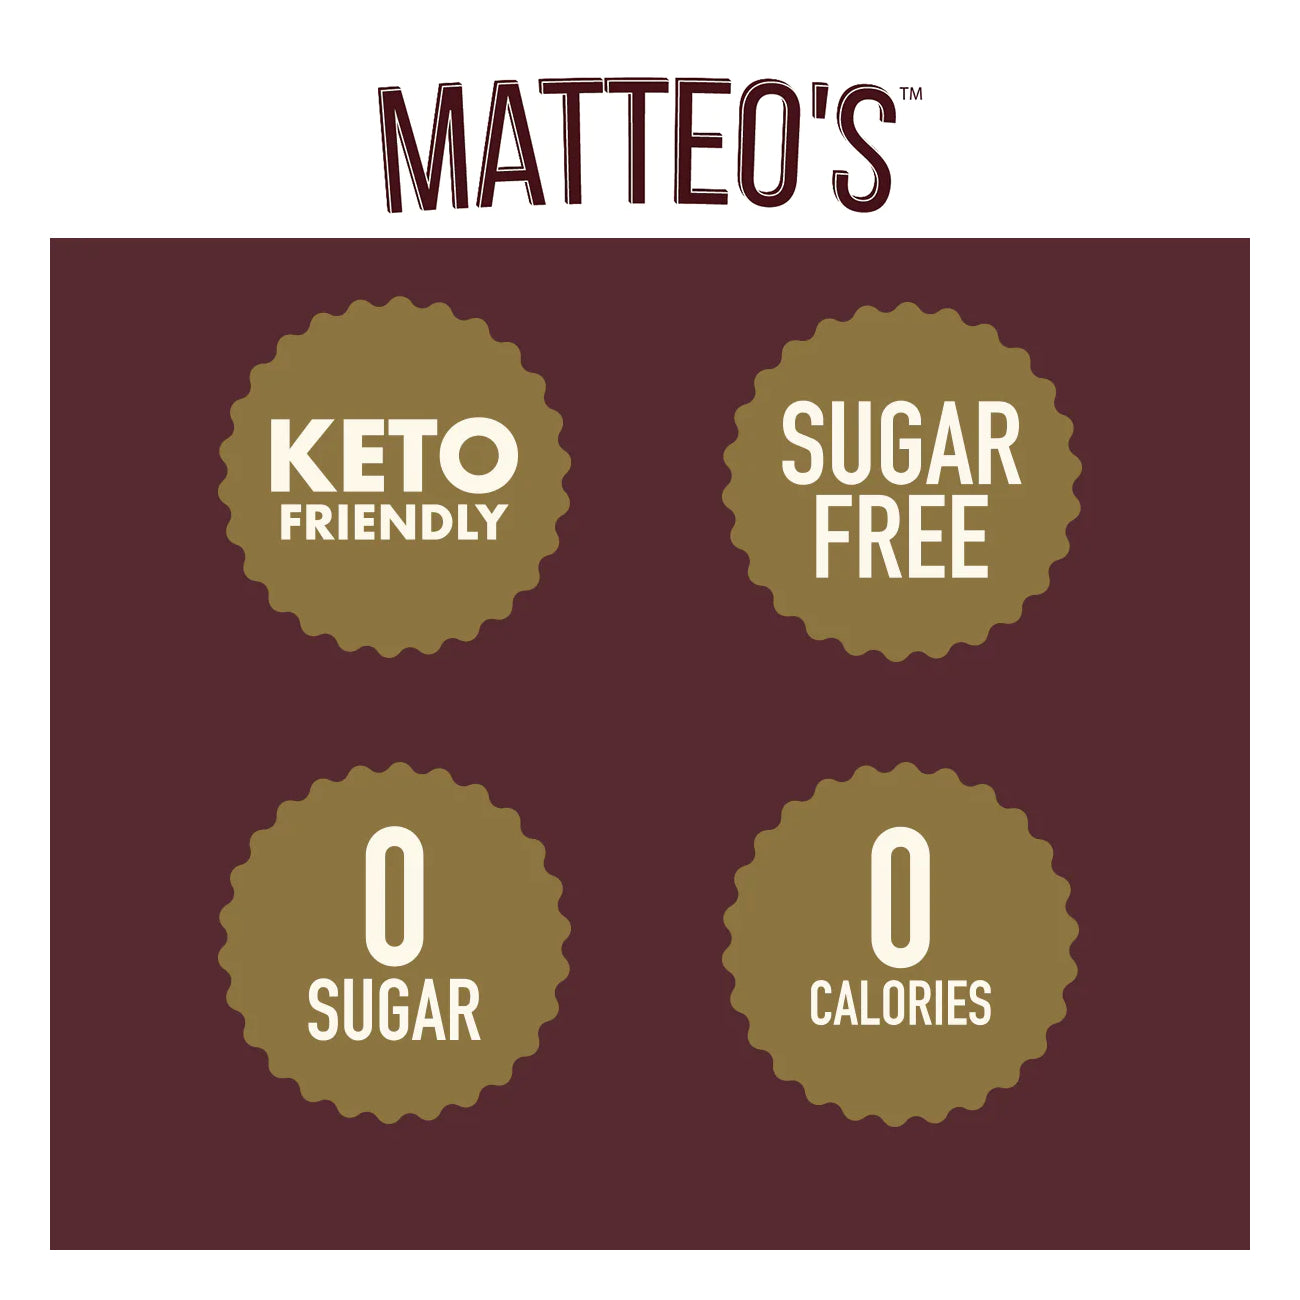 Matteo's Coffee Syrup Sugar Free Caramel / 750ml